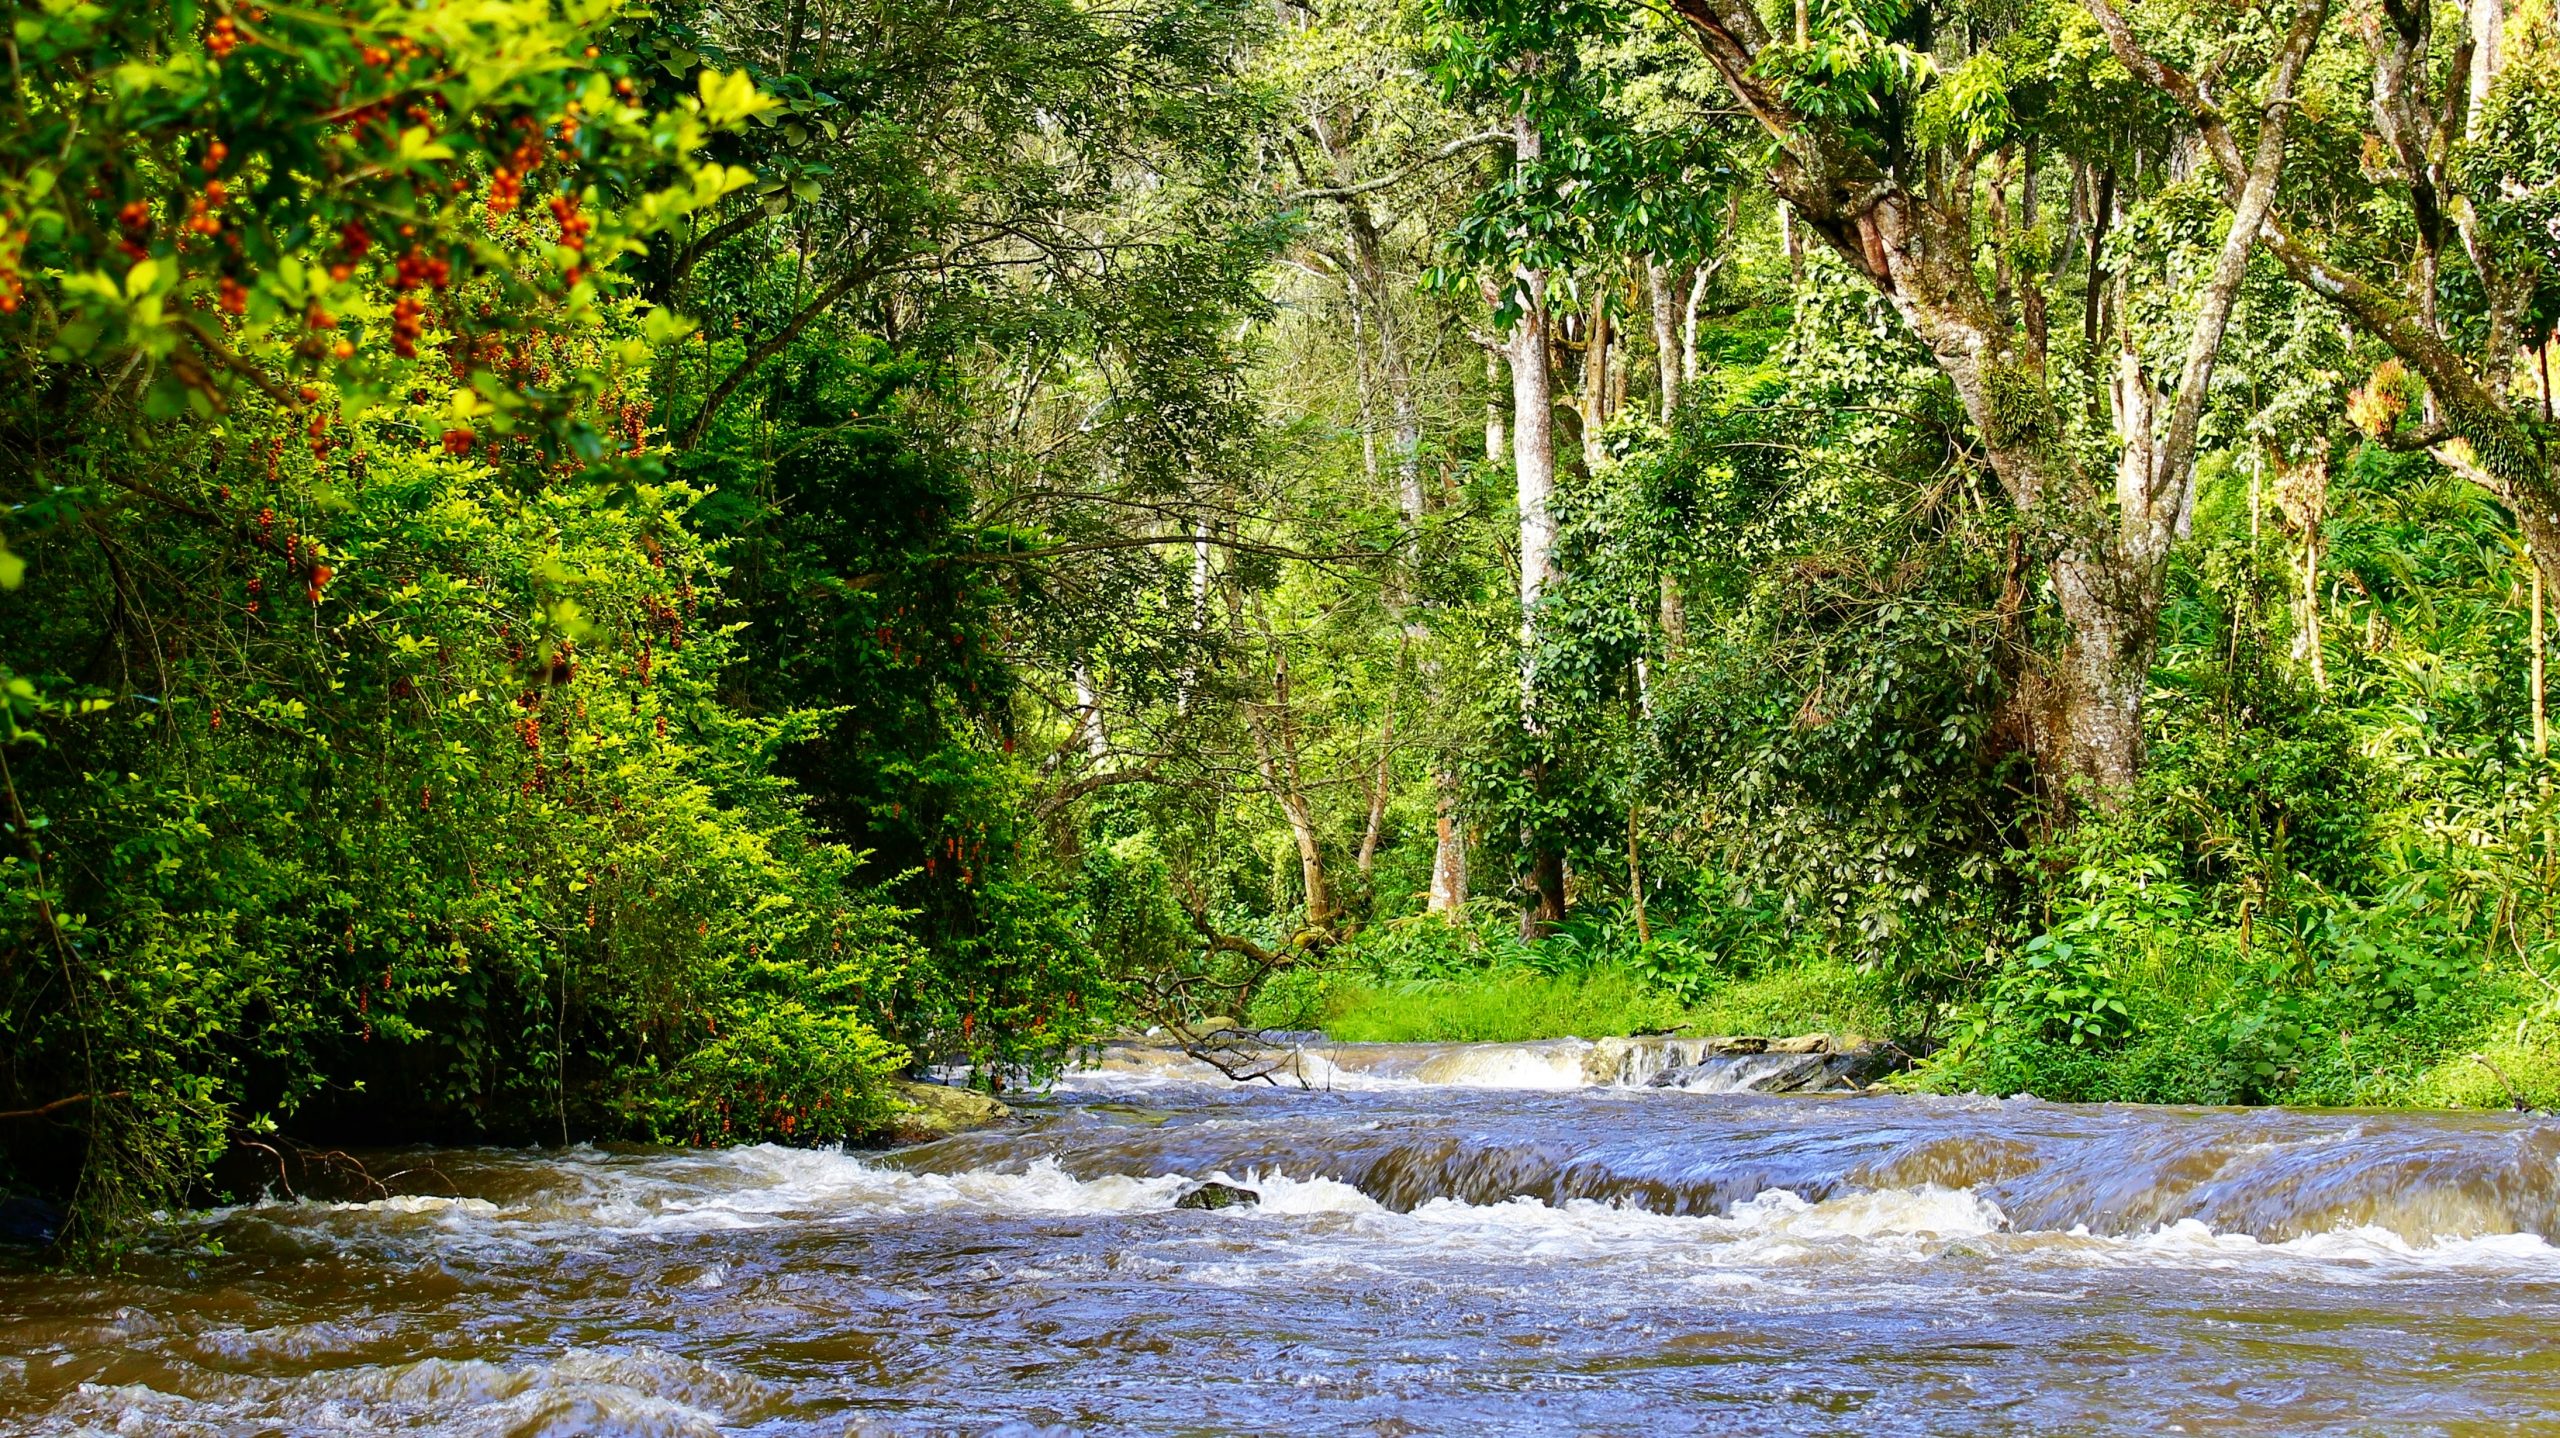 A river flowing through a jungle